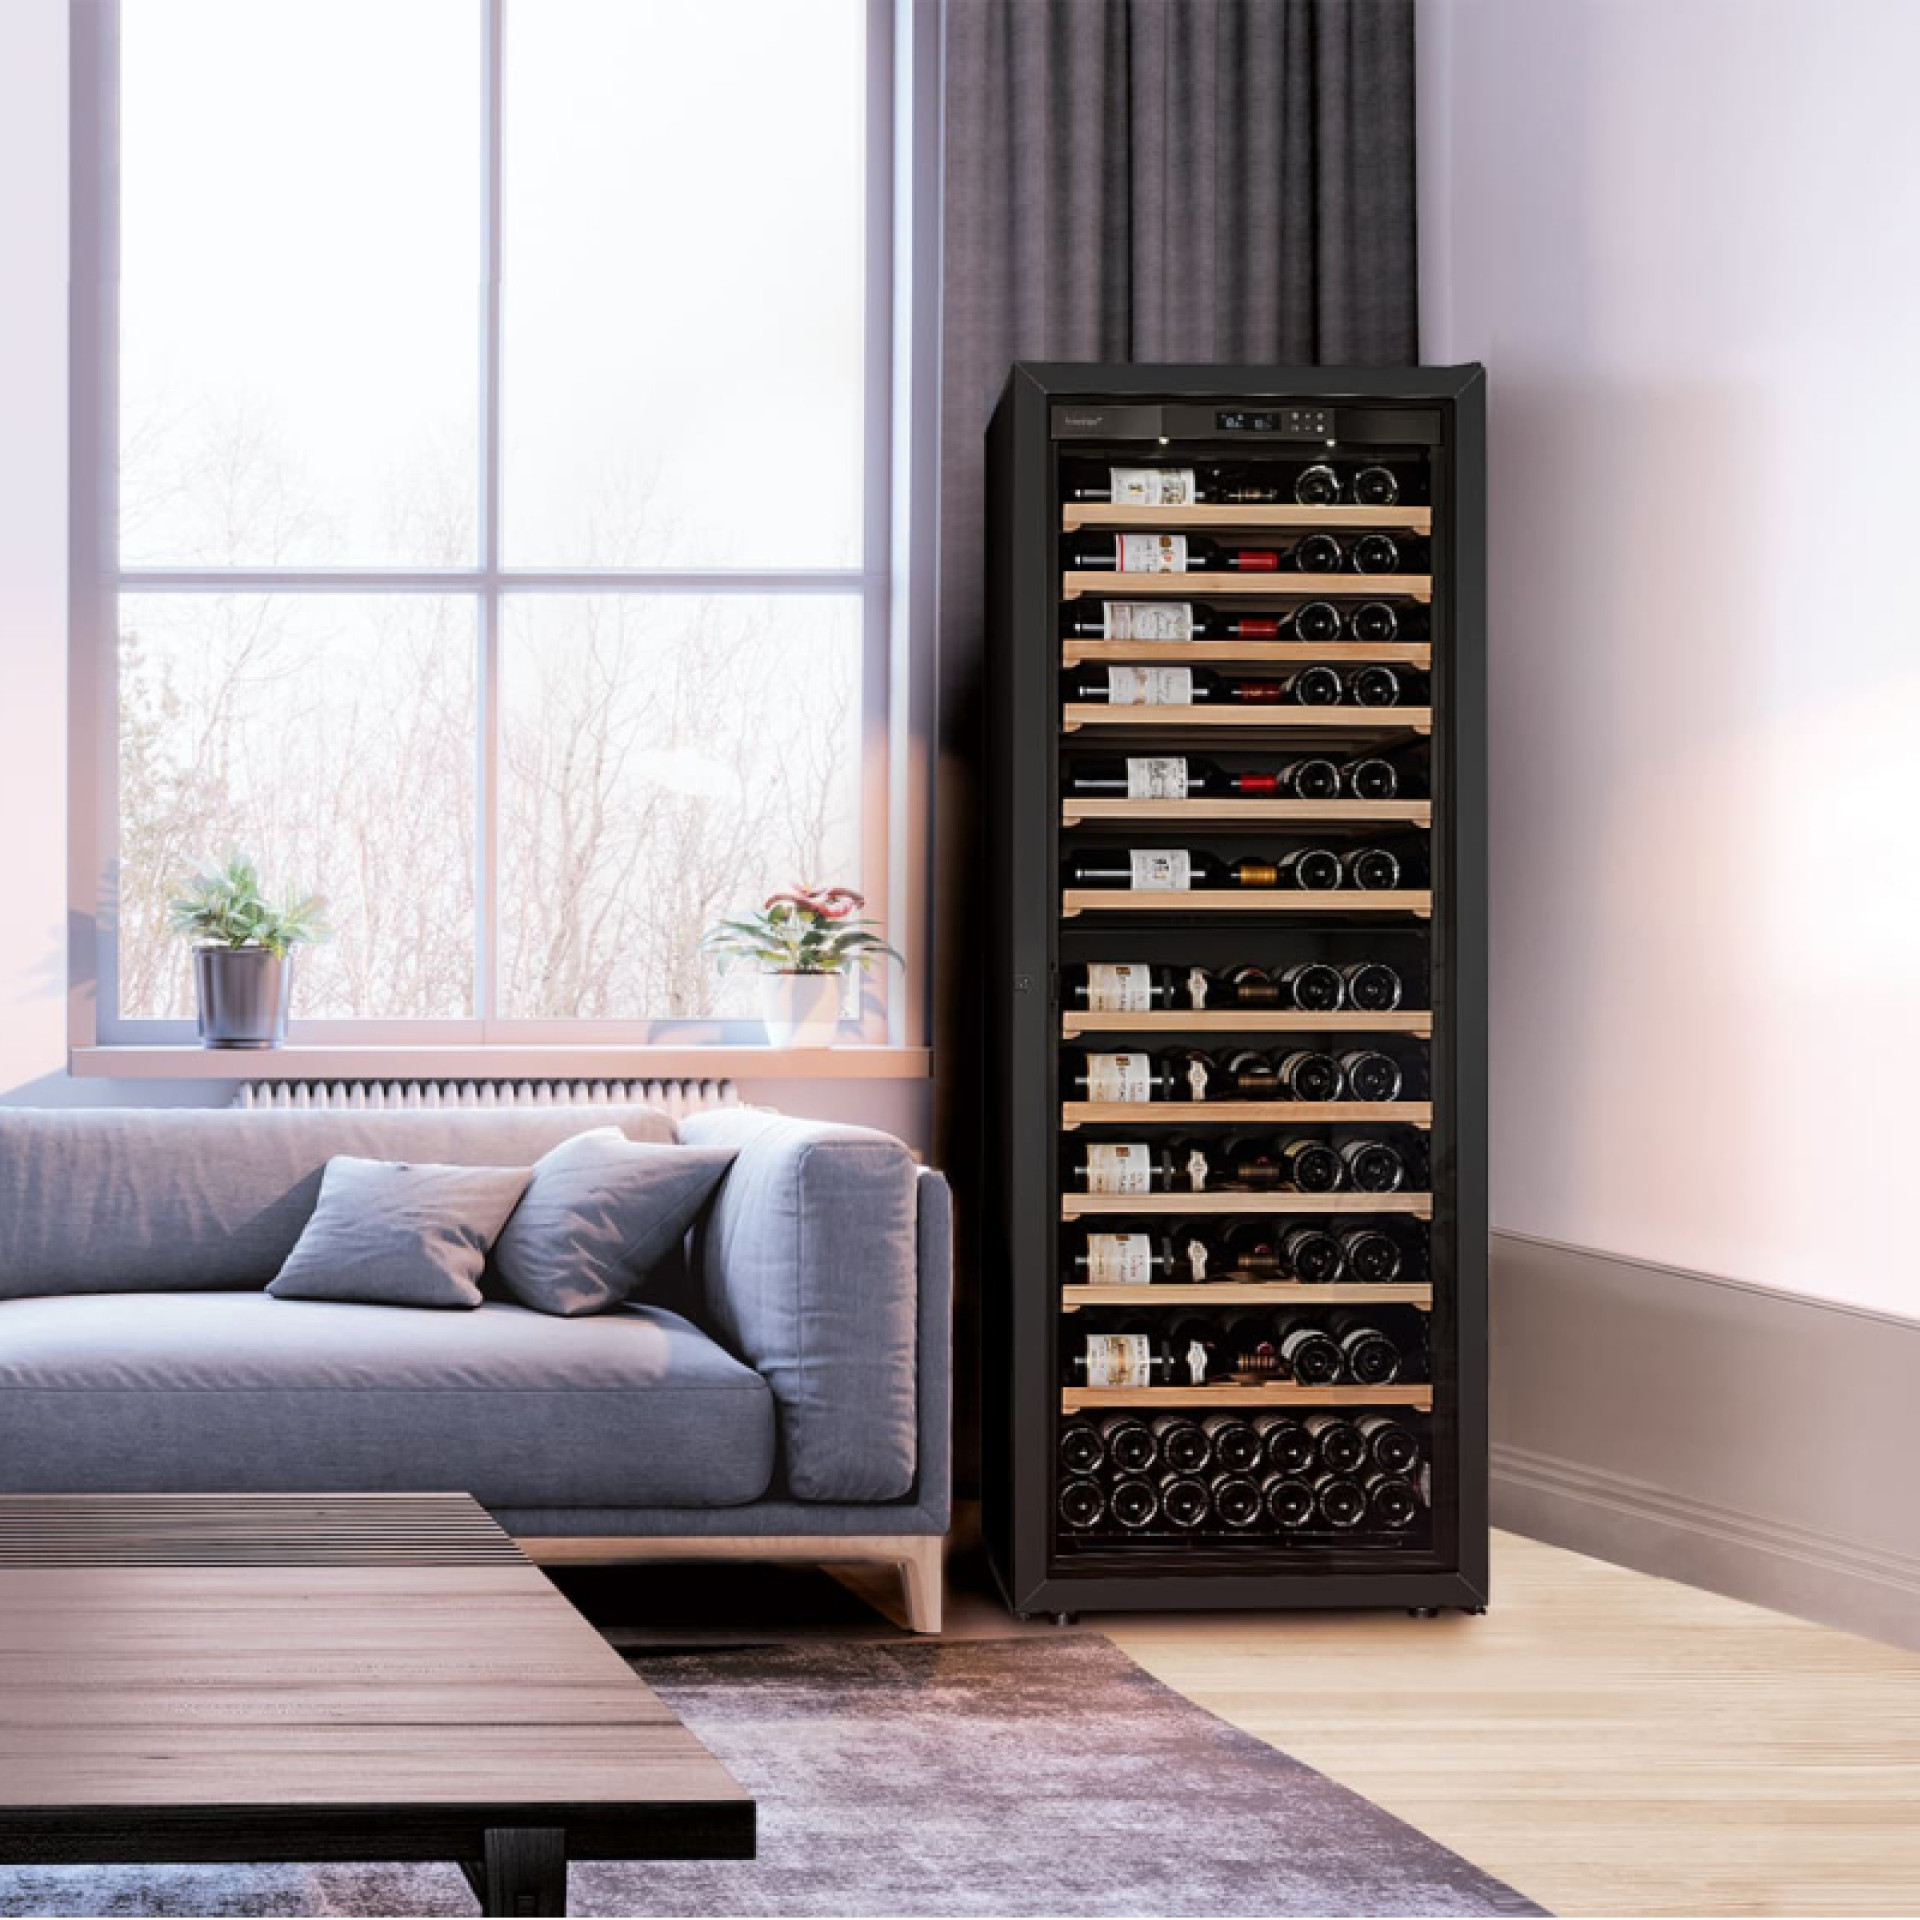 Wine-maturing cabinets